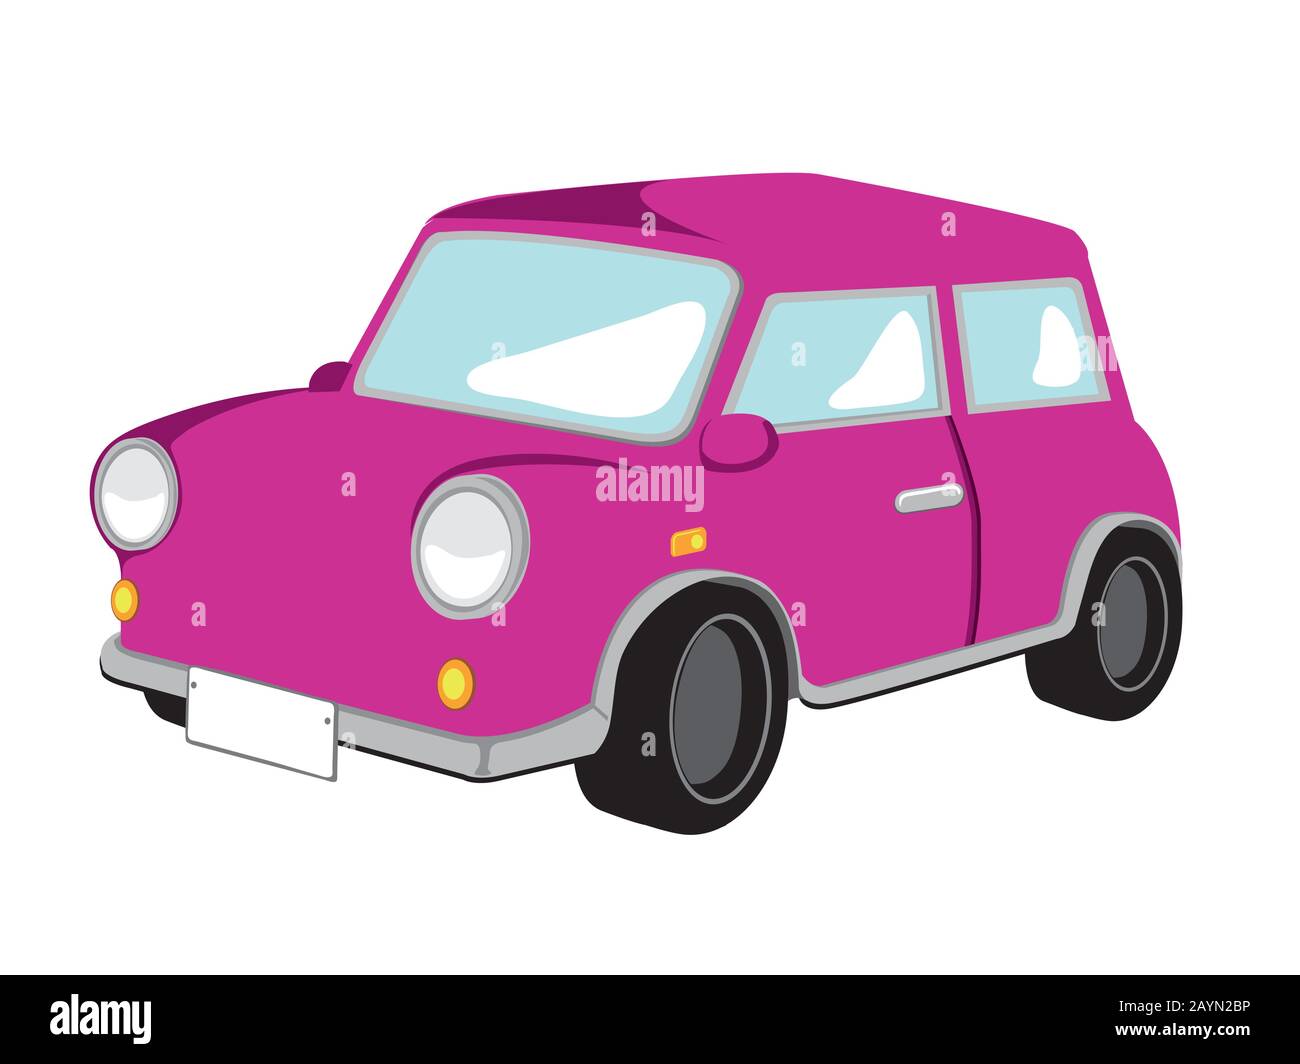 Cartoon mini car vector illustration Stock Vector